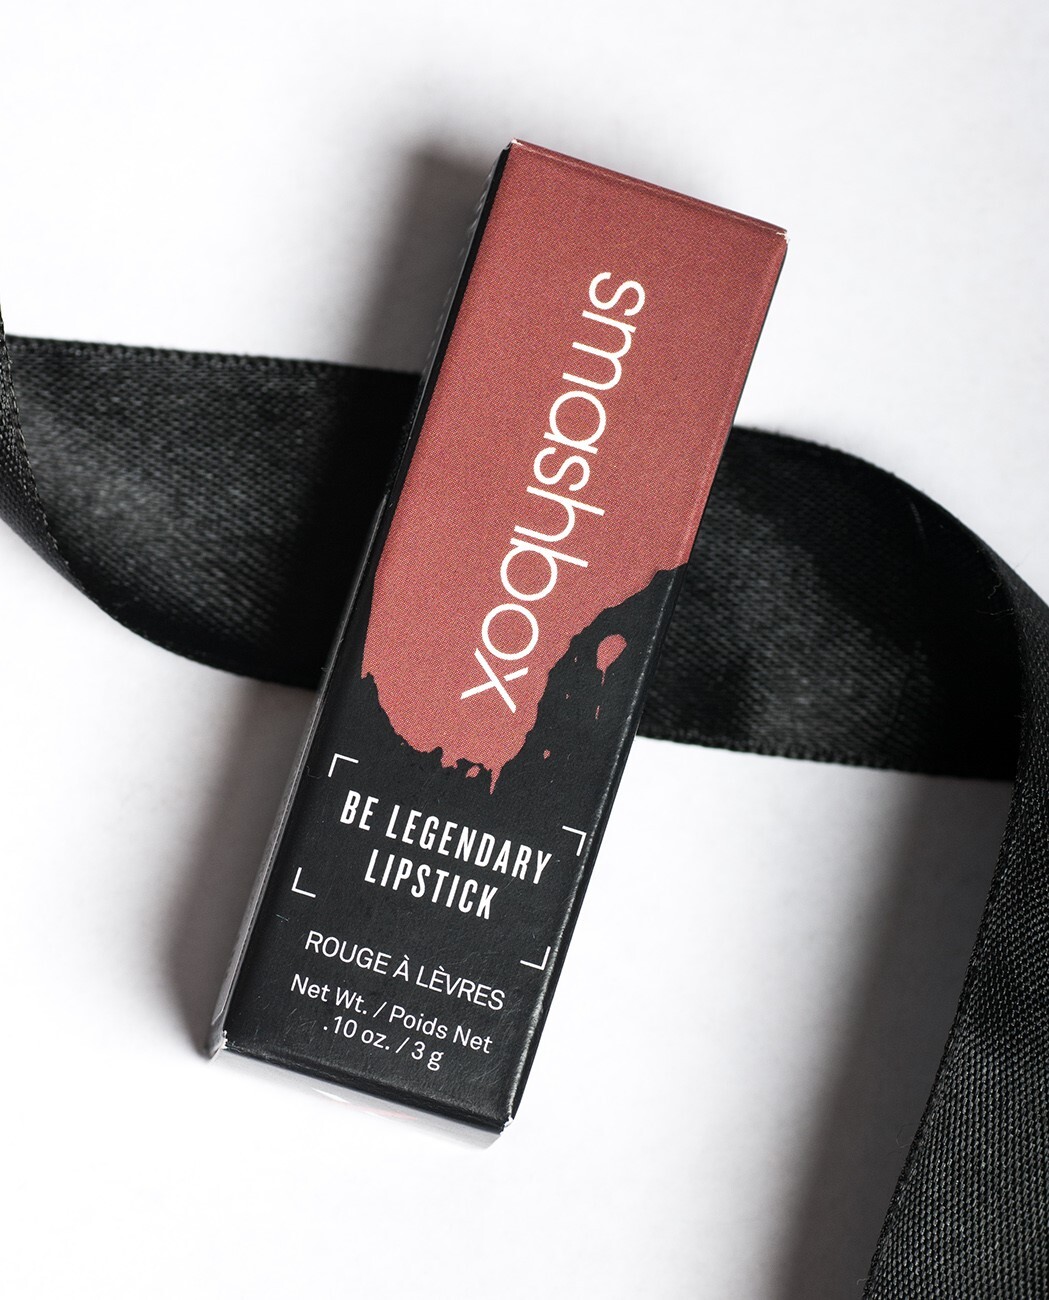 Секреты красоты: Smashbox Be Legendary Lipstick